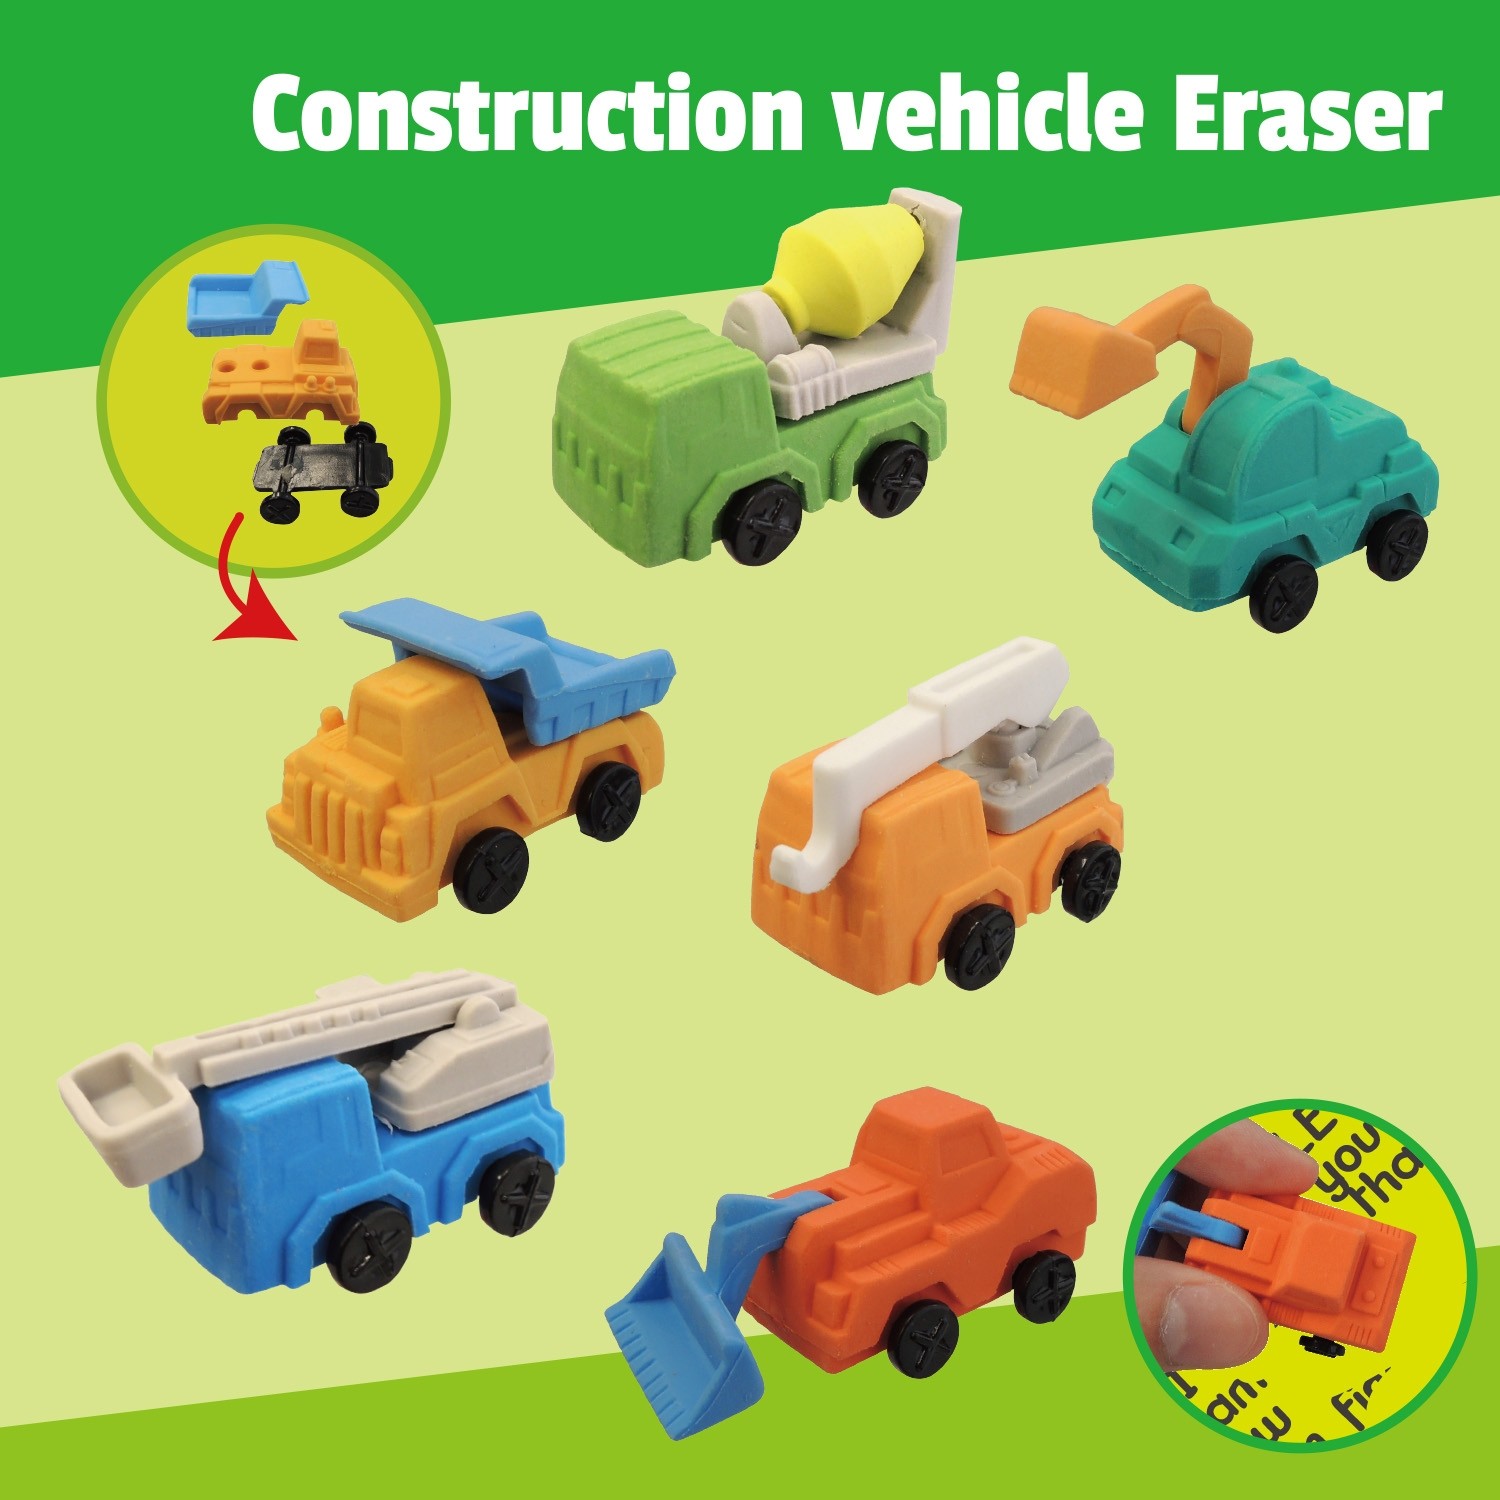 Construction Vehicle Eraser